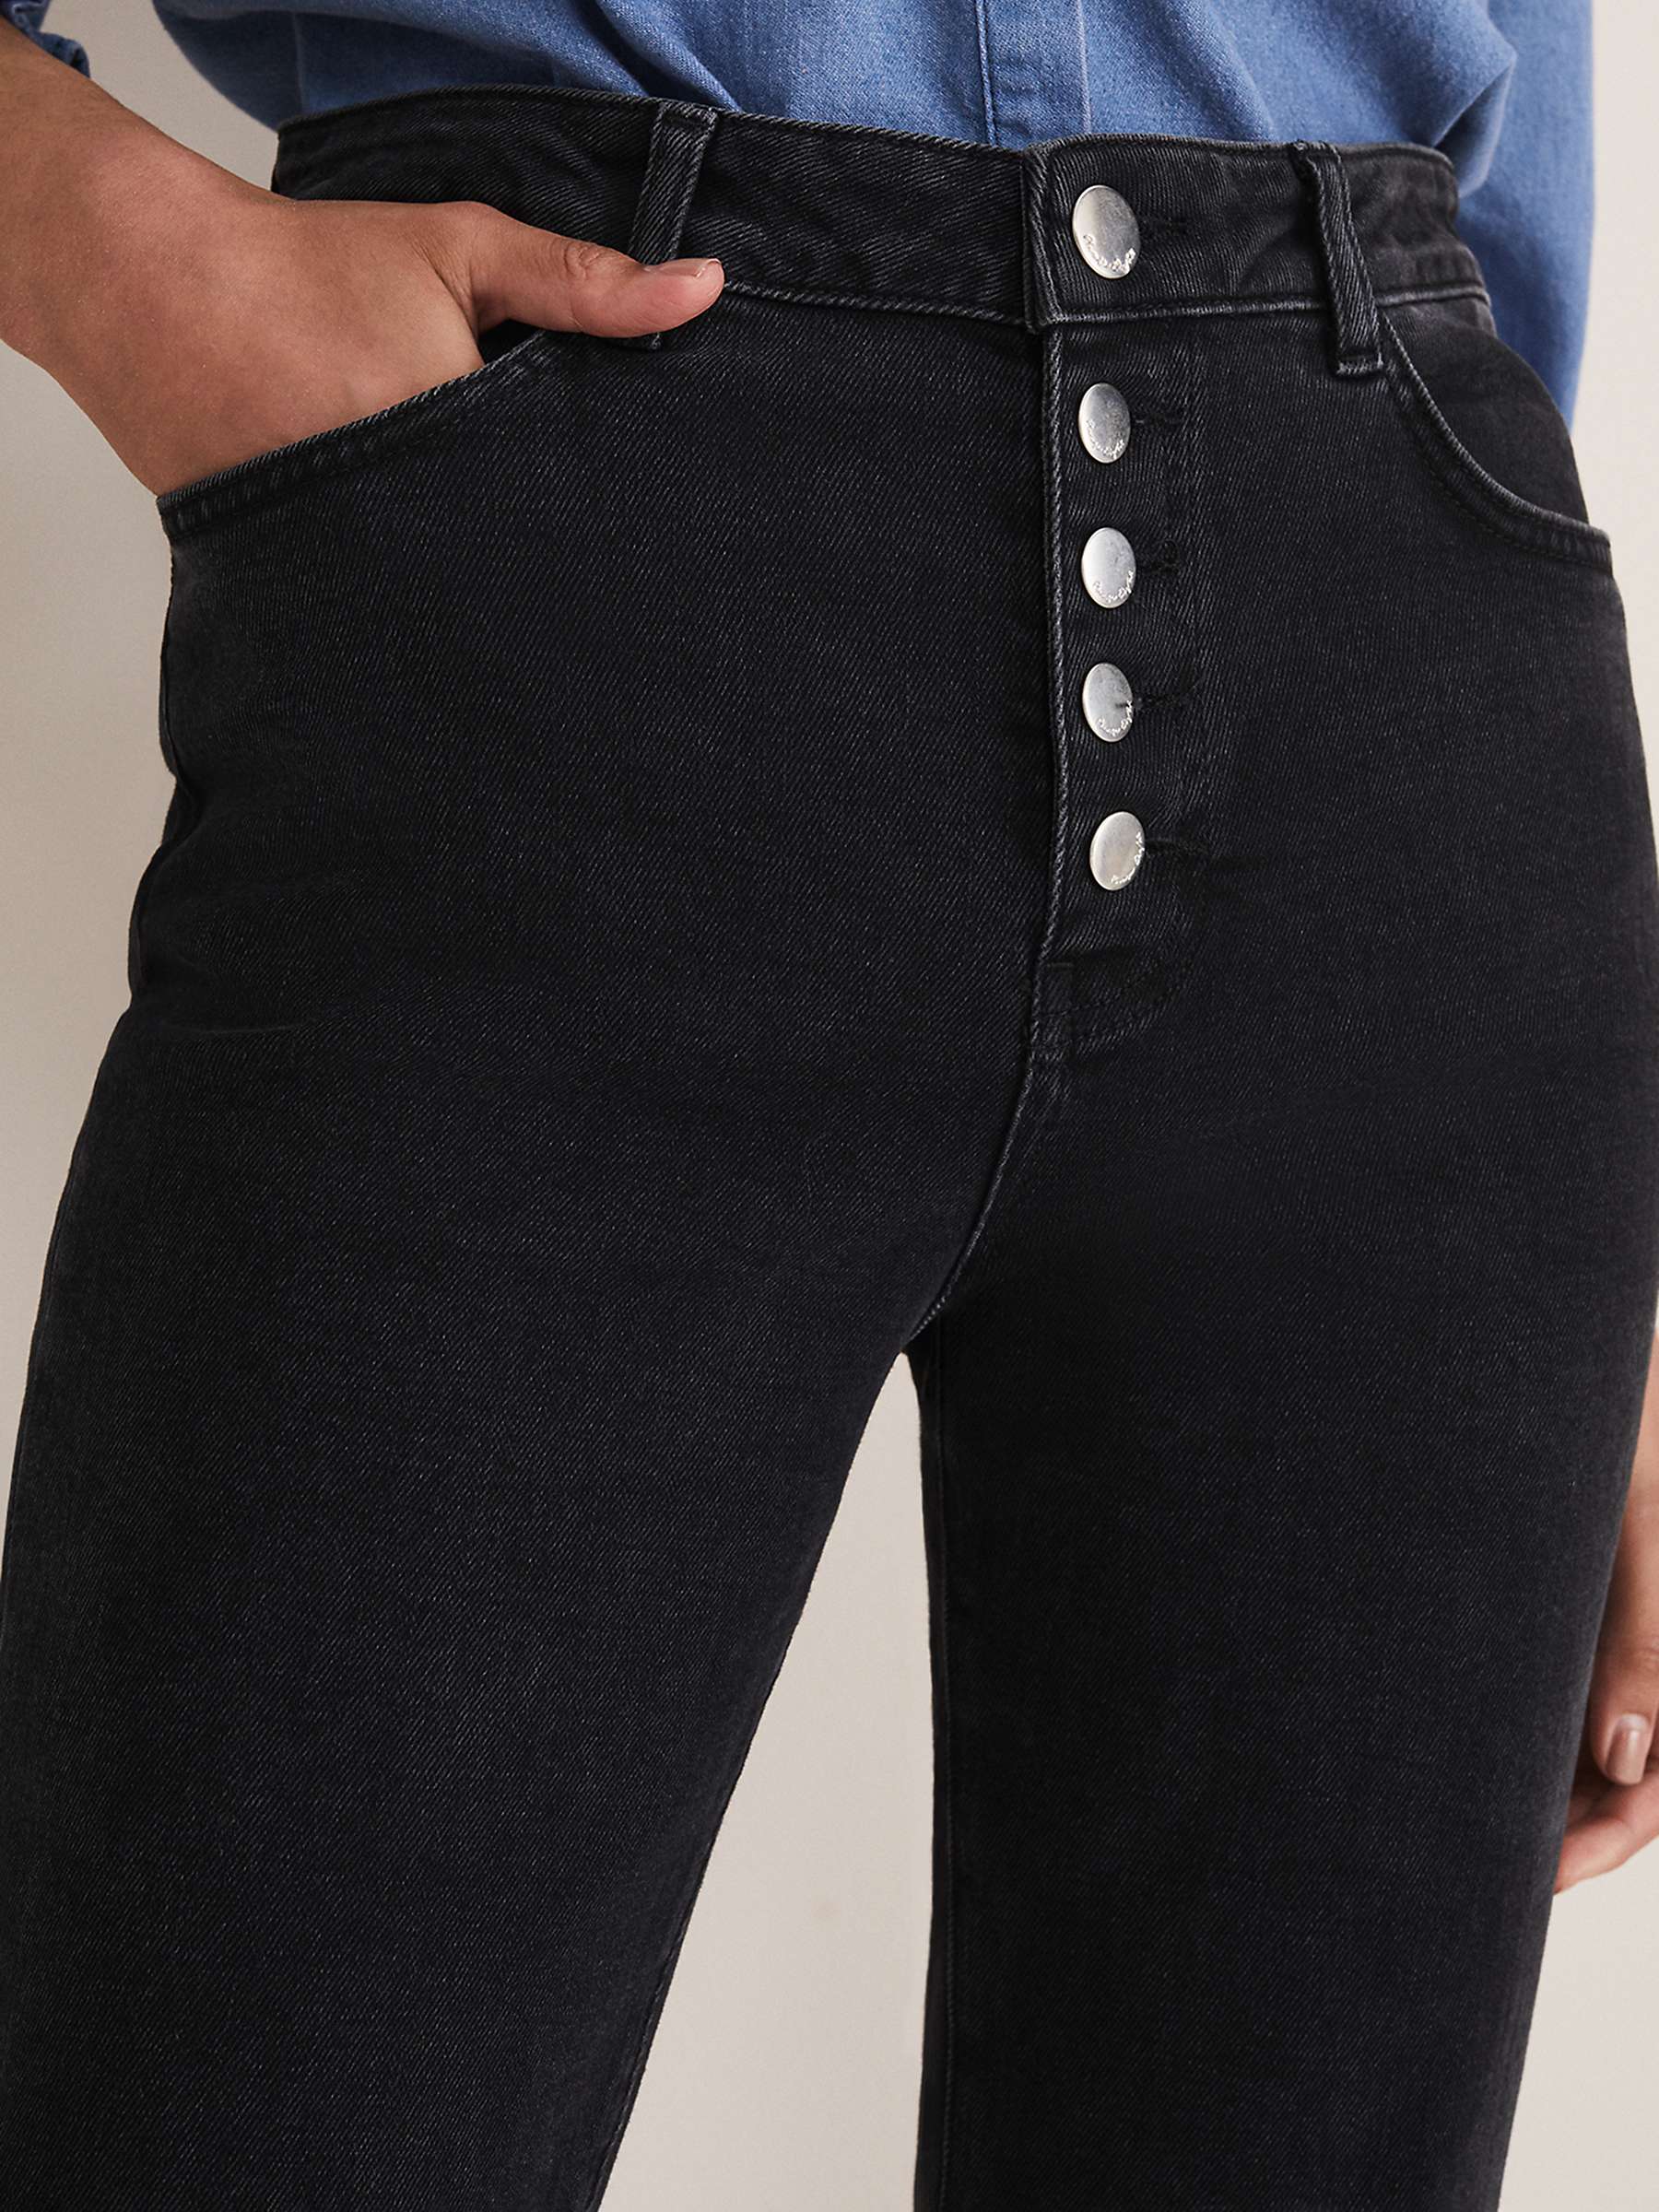 Phase Eight Karlie Cropped Slim Fit Jeans, Black at John Lewis & Partners